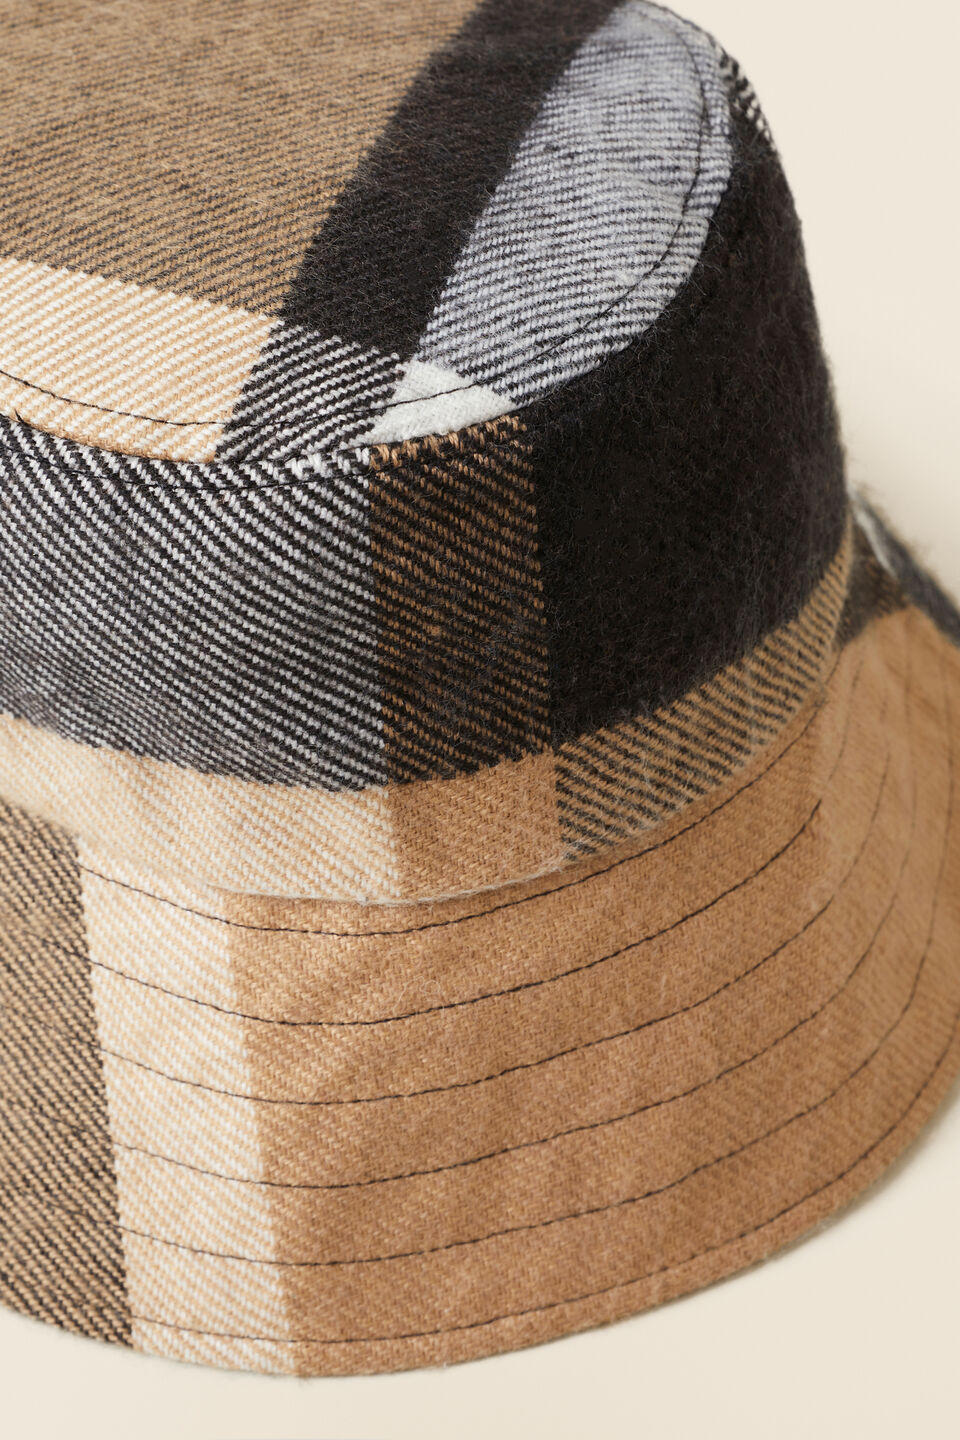 Check Wool Blend Bucket Hat  Black Multi